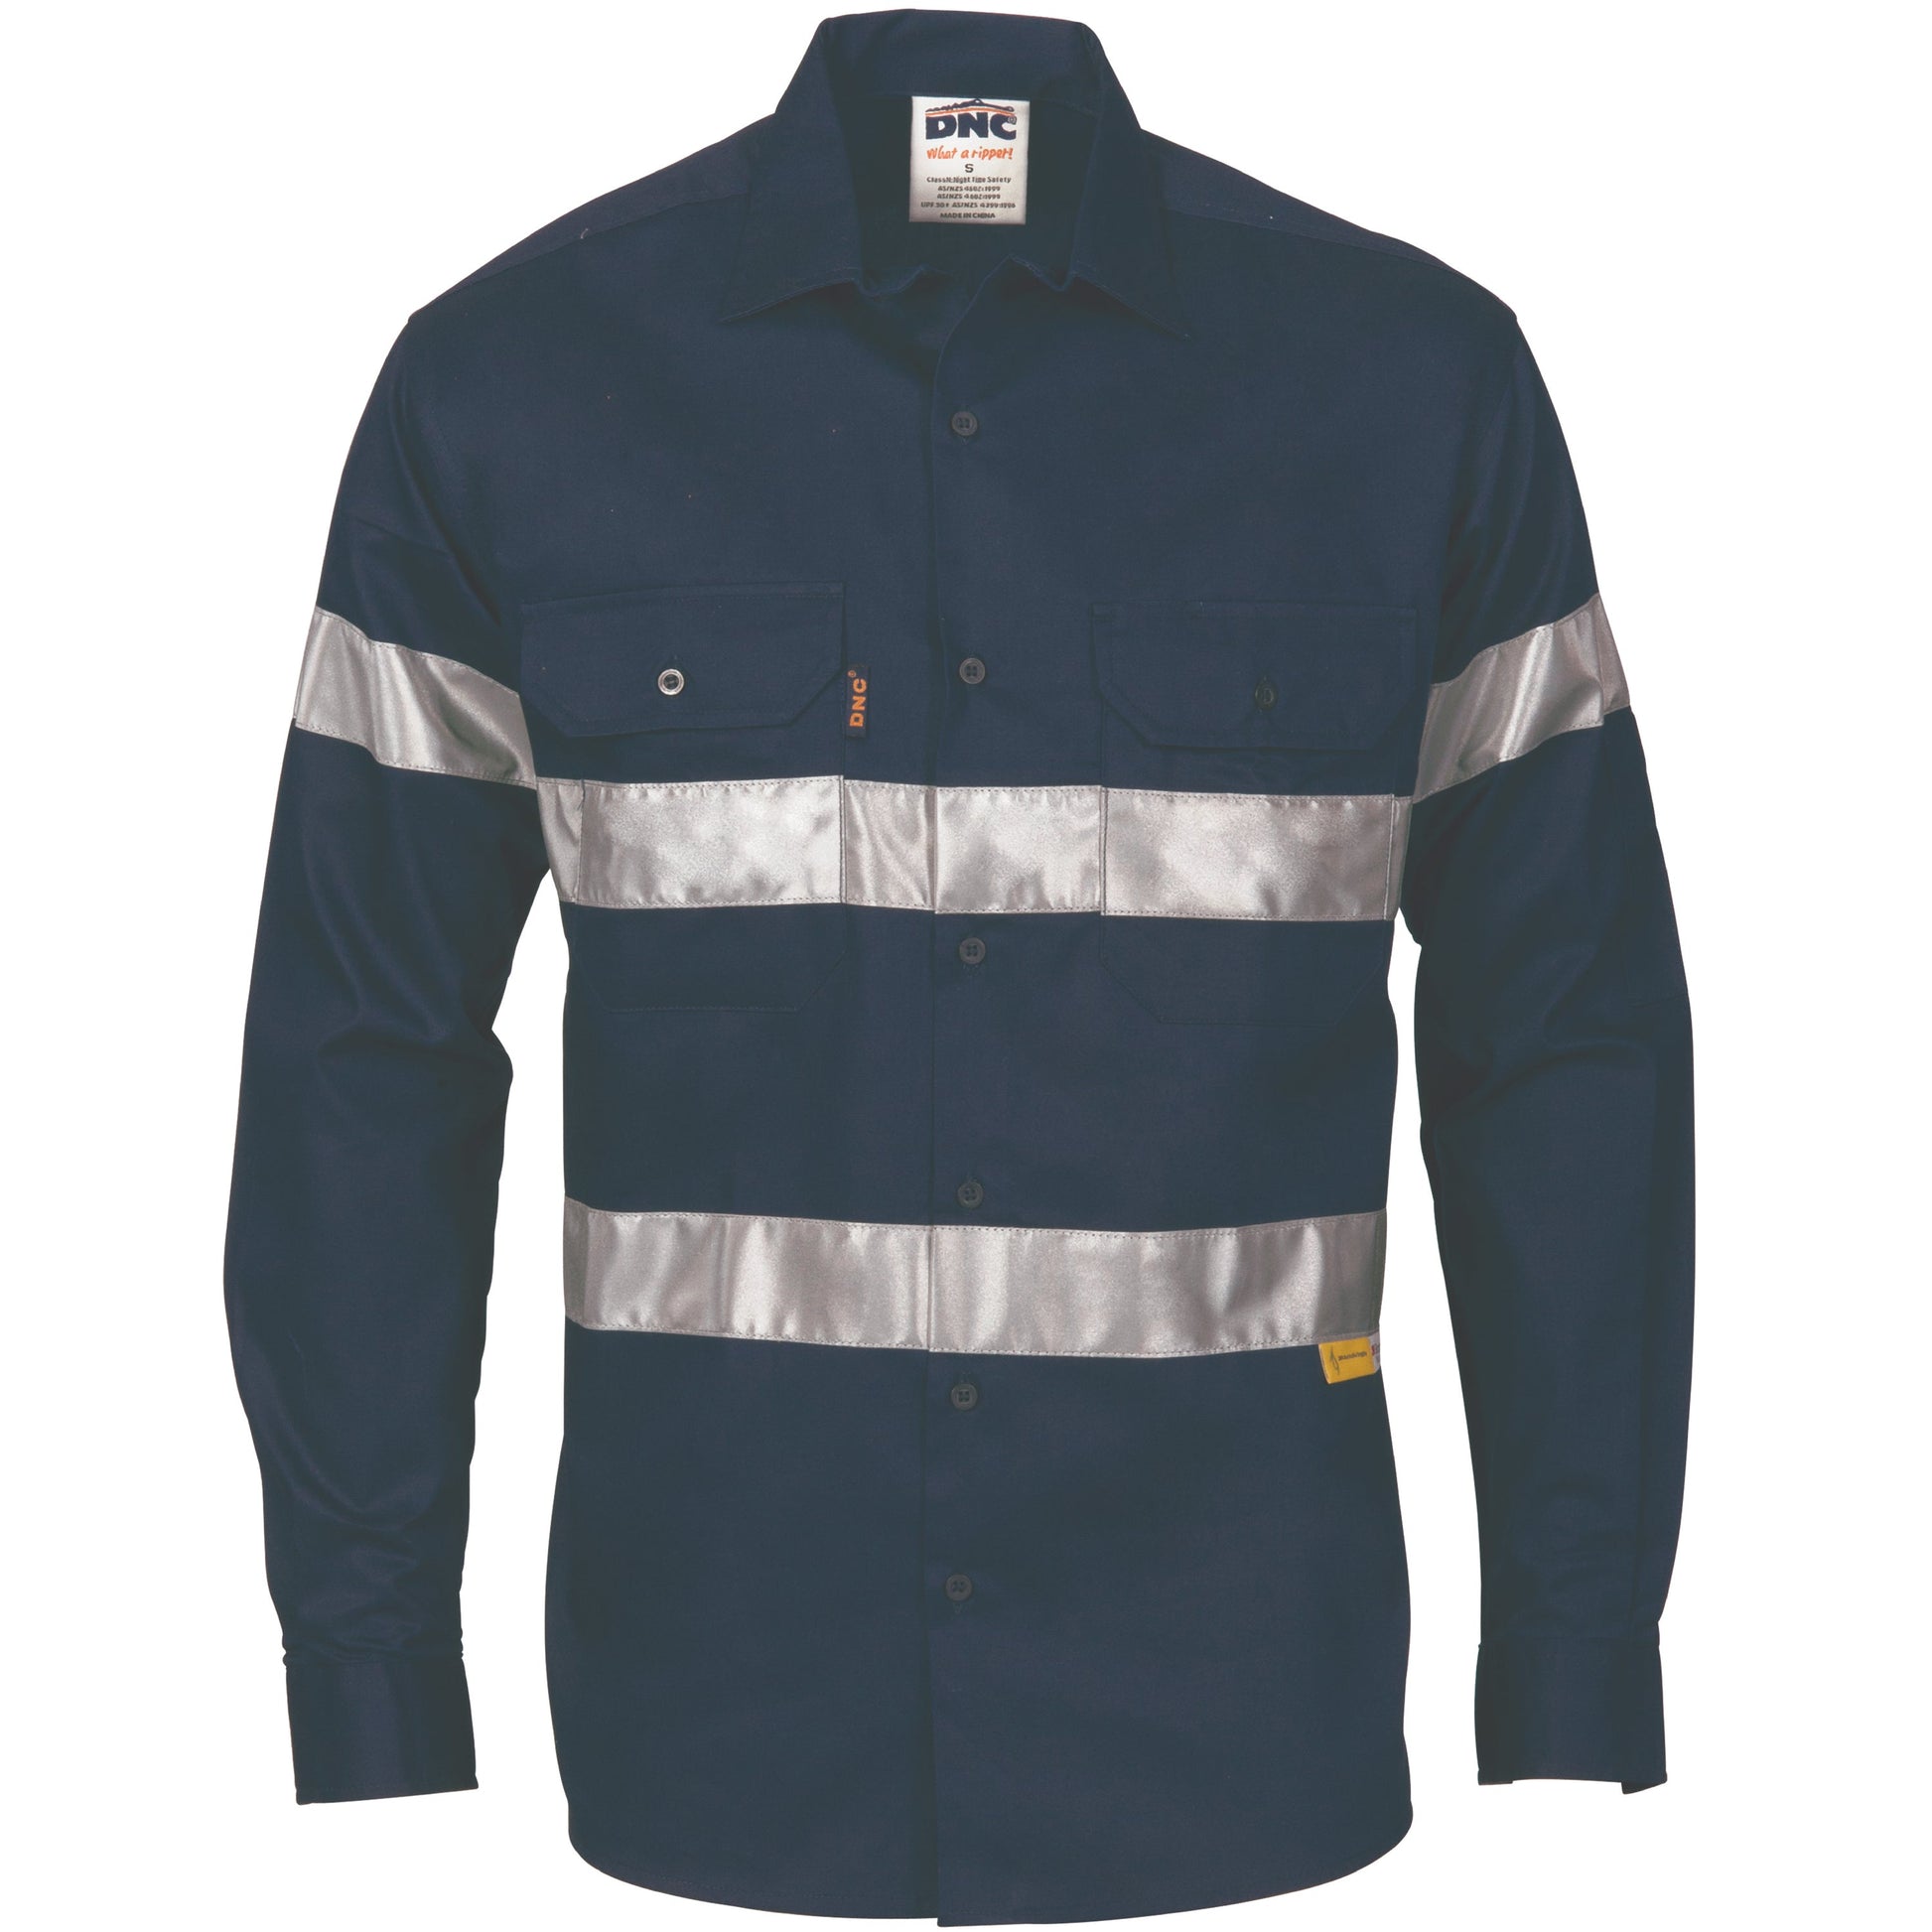 Dnc Workwear Hi-vis Cool-breeze Long Sleeve Cotton Shirt With Generic Reflective Tape - 3967 Work Wear DNC Workwear Navy XS 